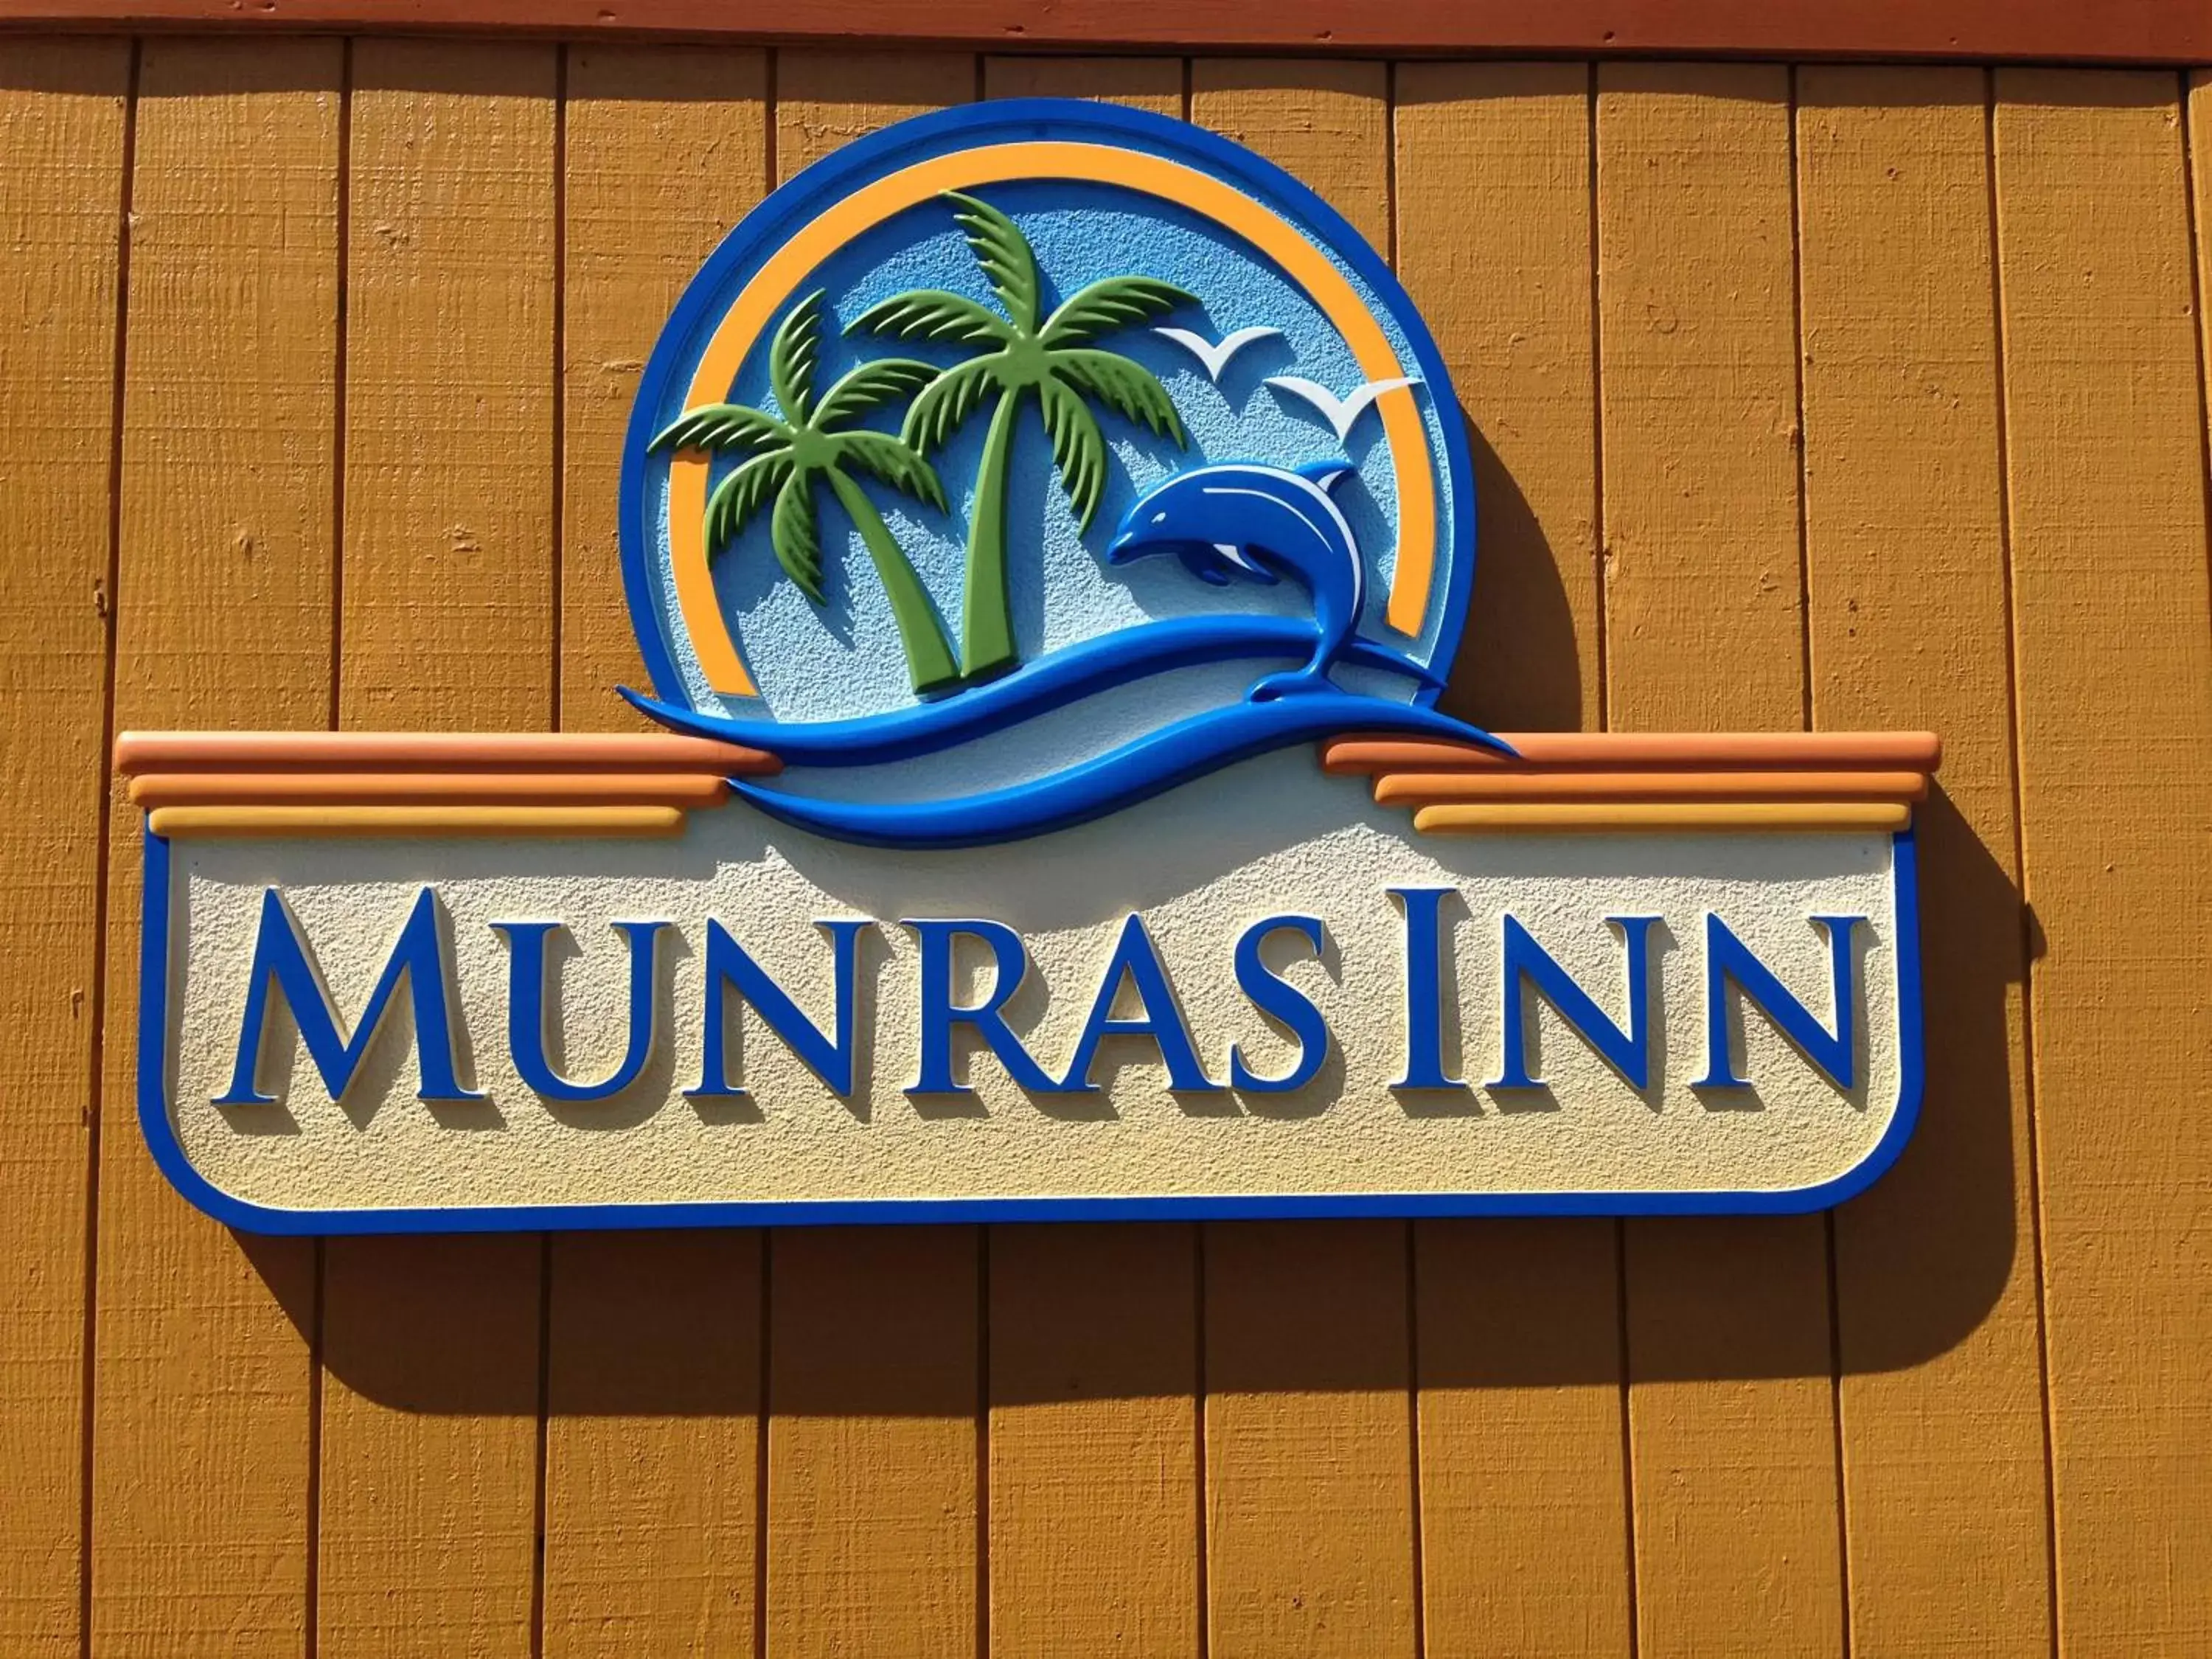 Property logo or sign in Munras Inn